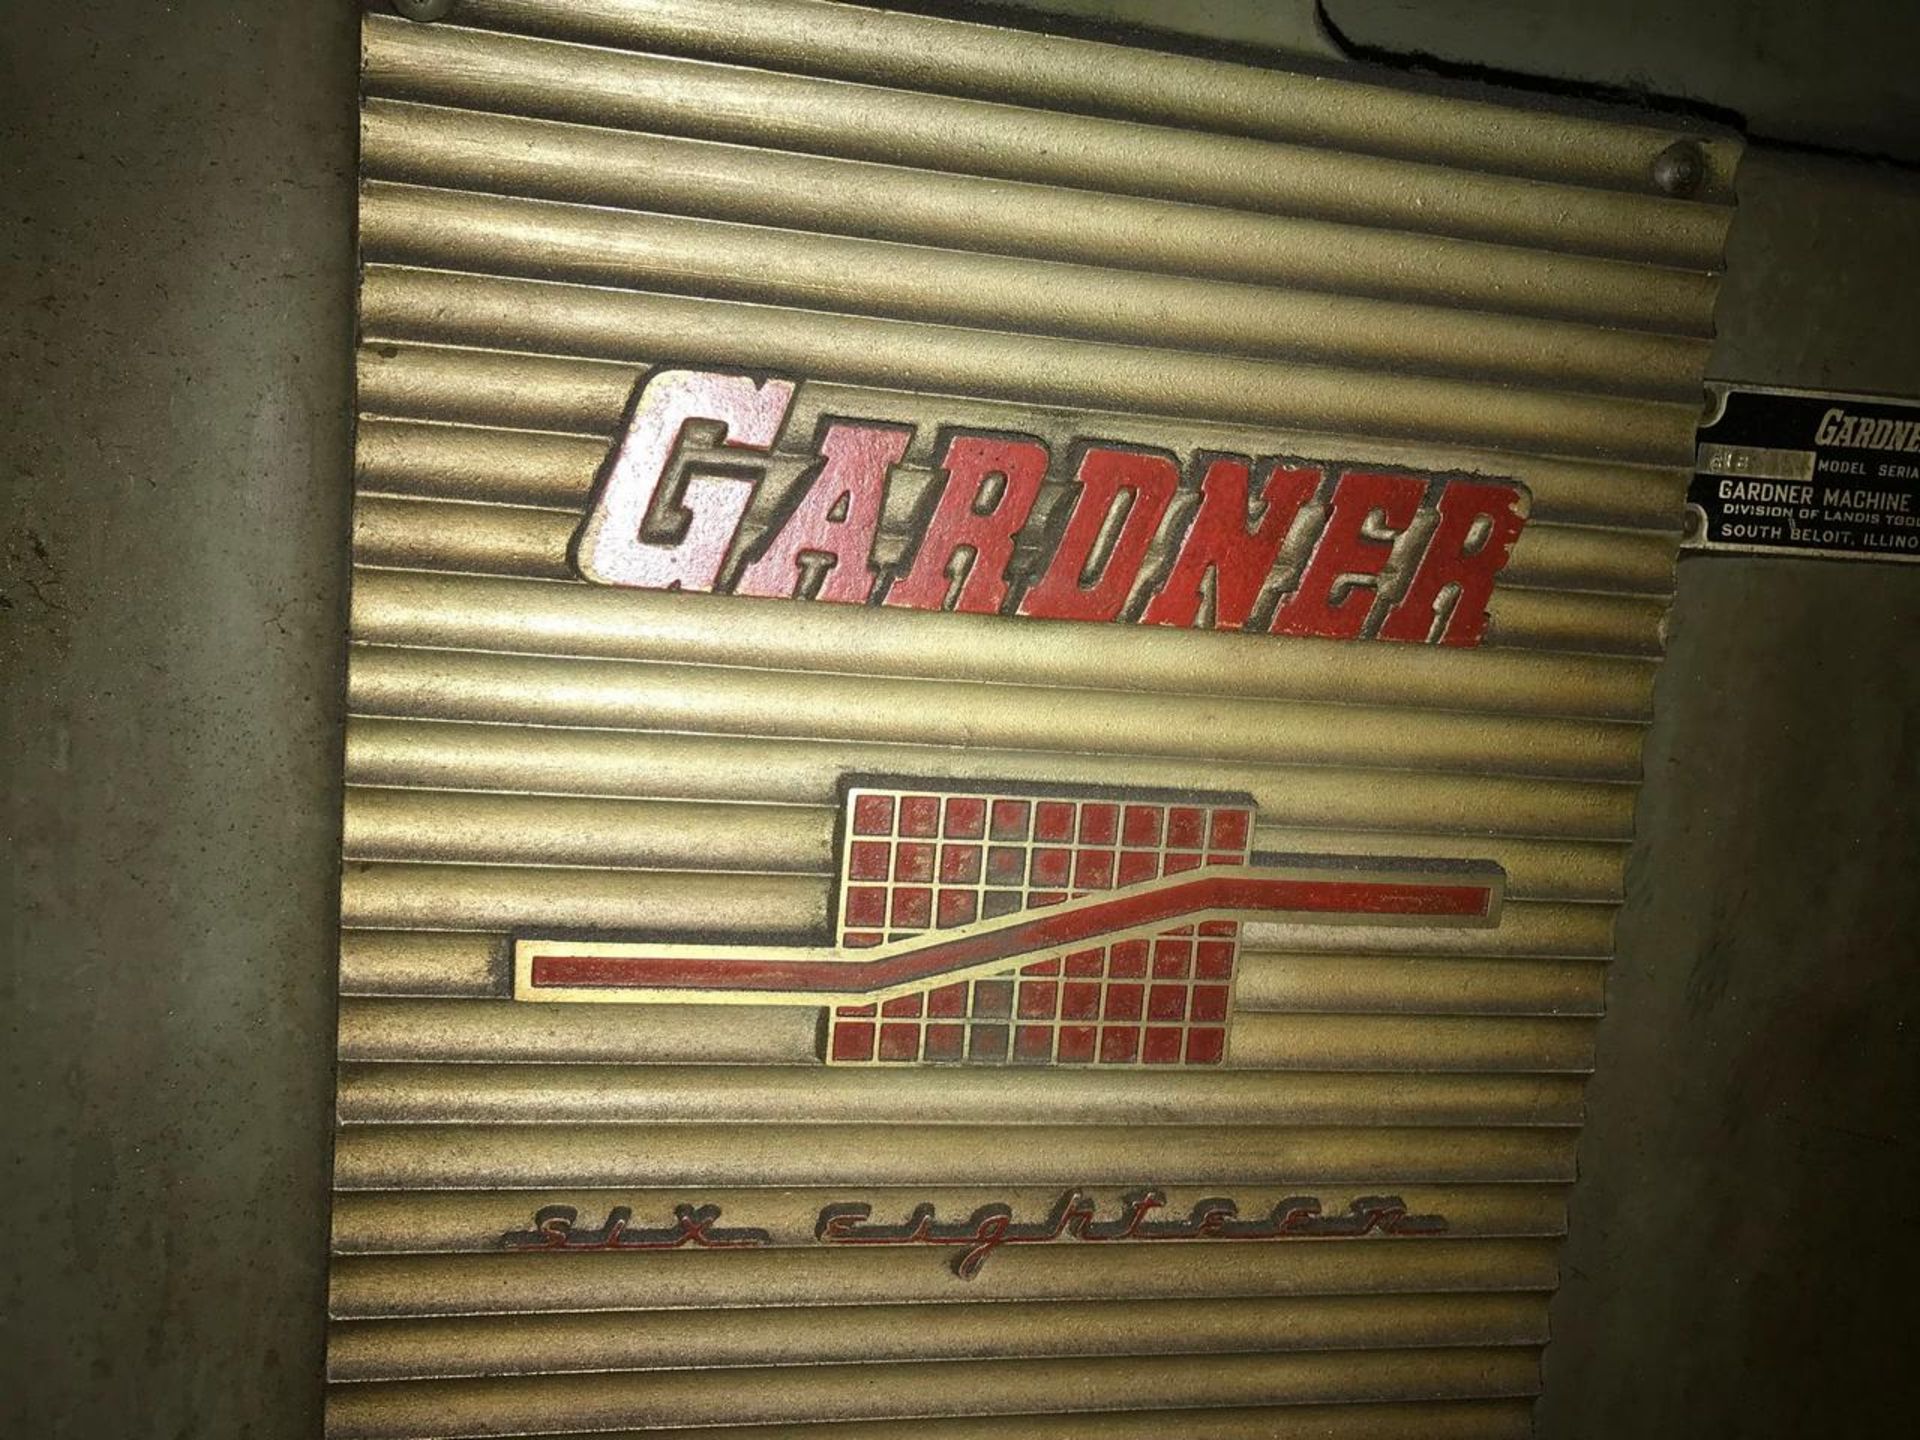 Gardner 618 6" x 18" Surface Grinder - Image 2 of 6